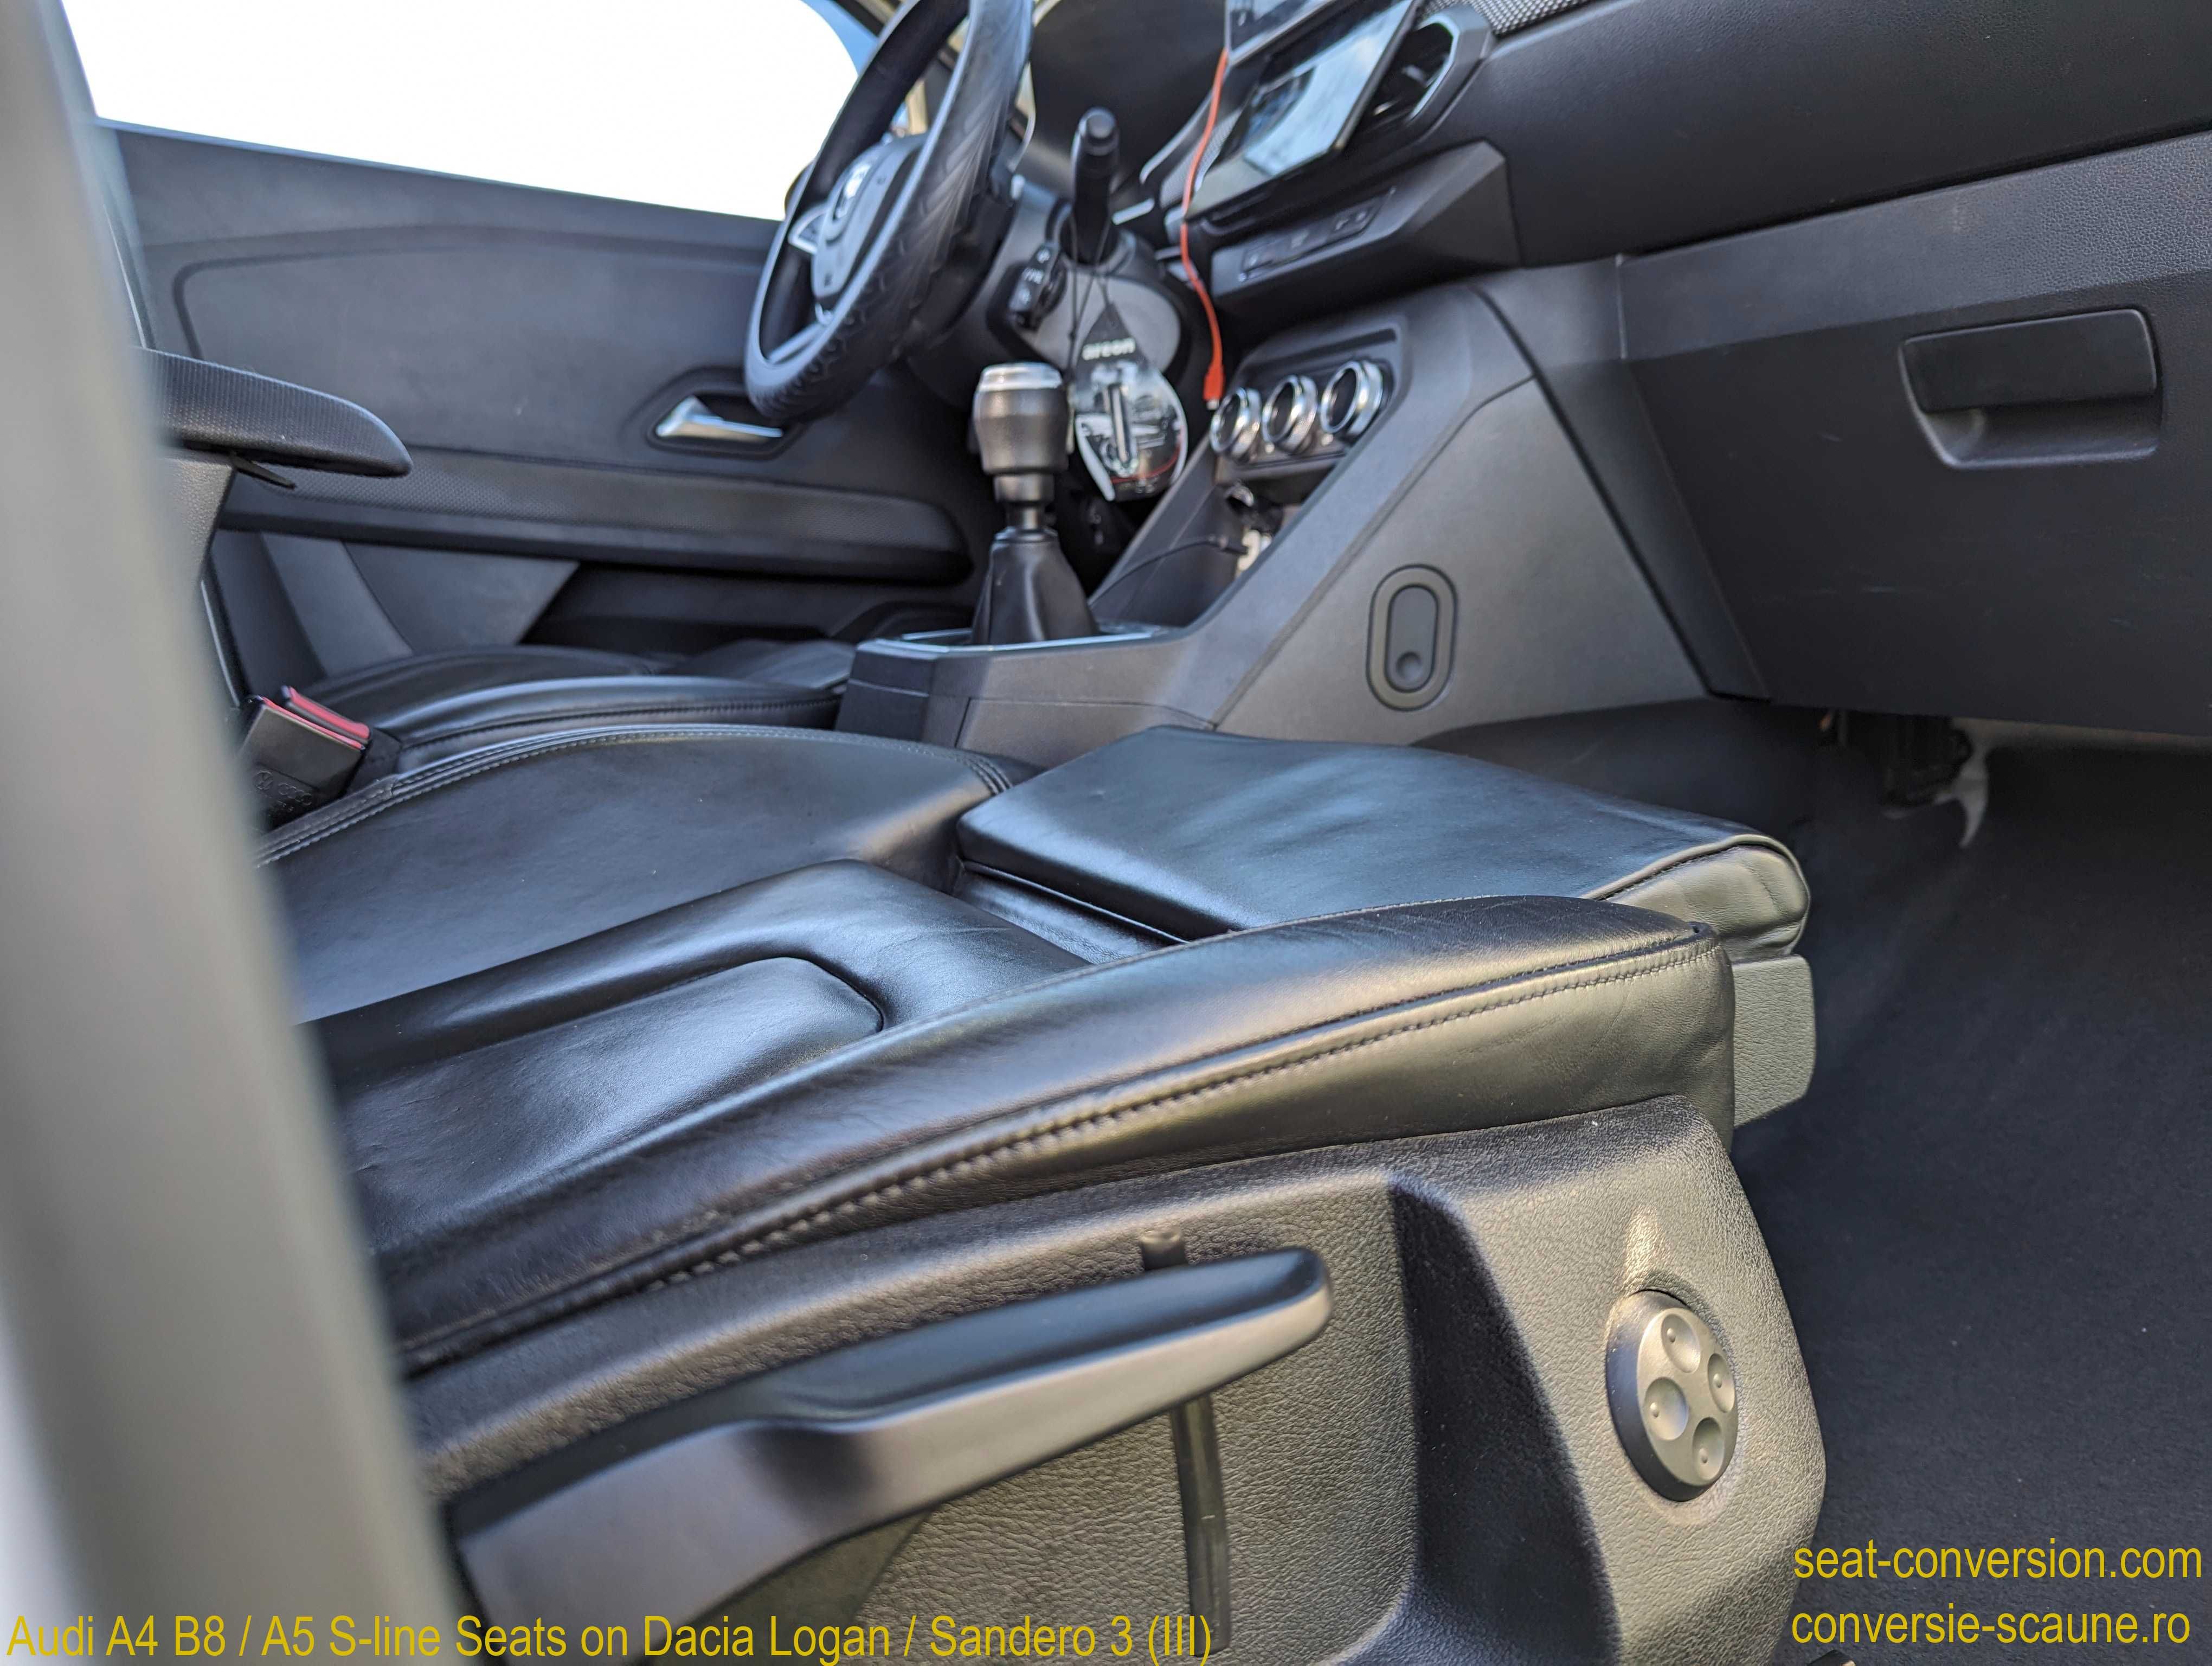 Sistem conversie scaune Audi A5 S-line - Logan Sandero 3 III 2020 +